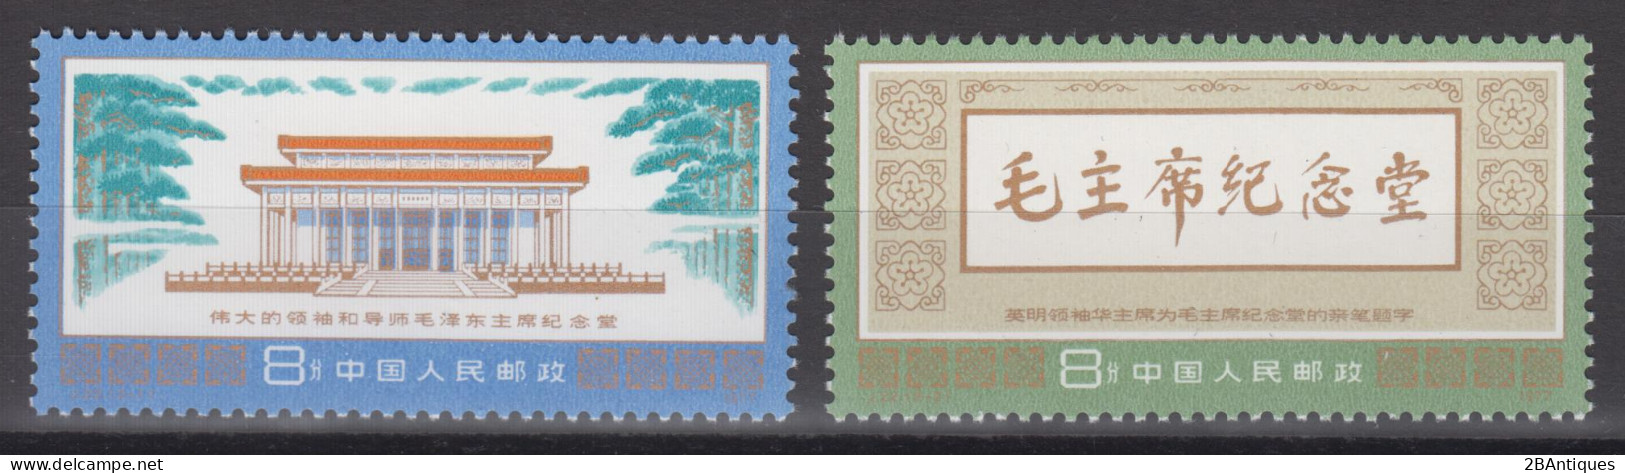 PR CHINA 1977 - Completion Of Mao Memorial Hall, Beijing MNH** OG XF - Unused Stamps